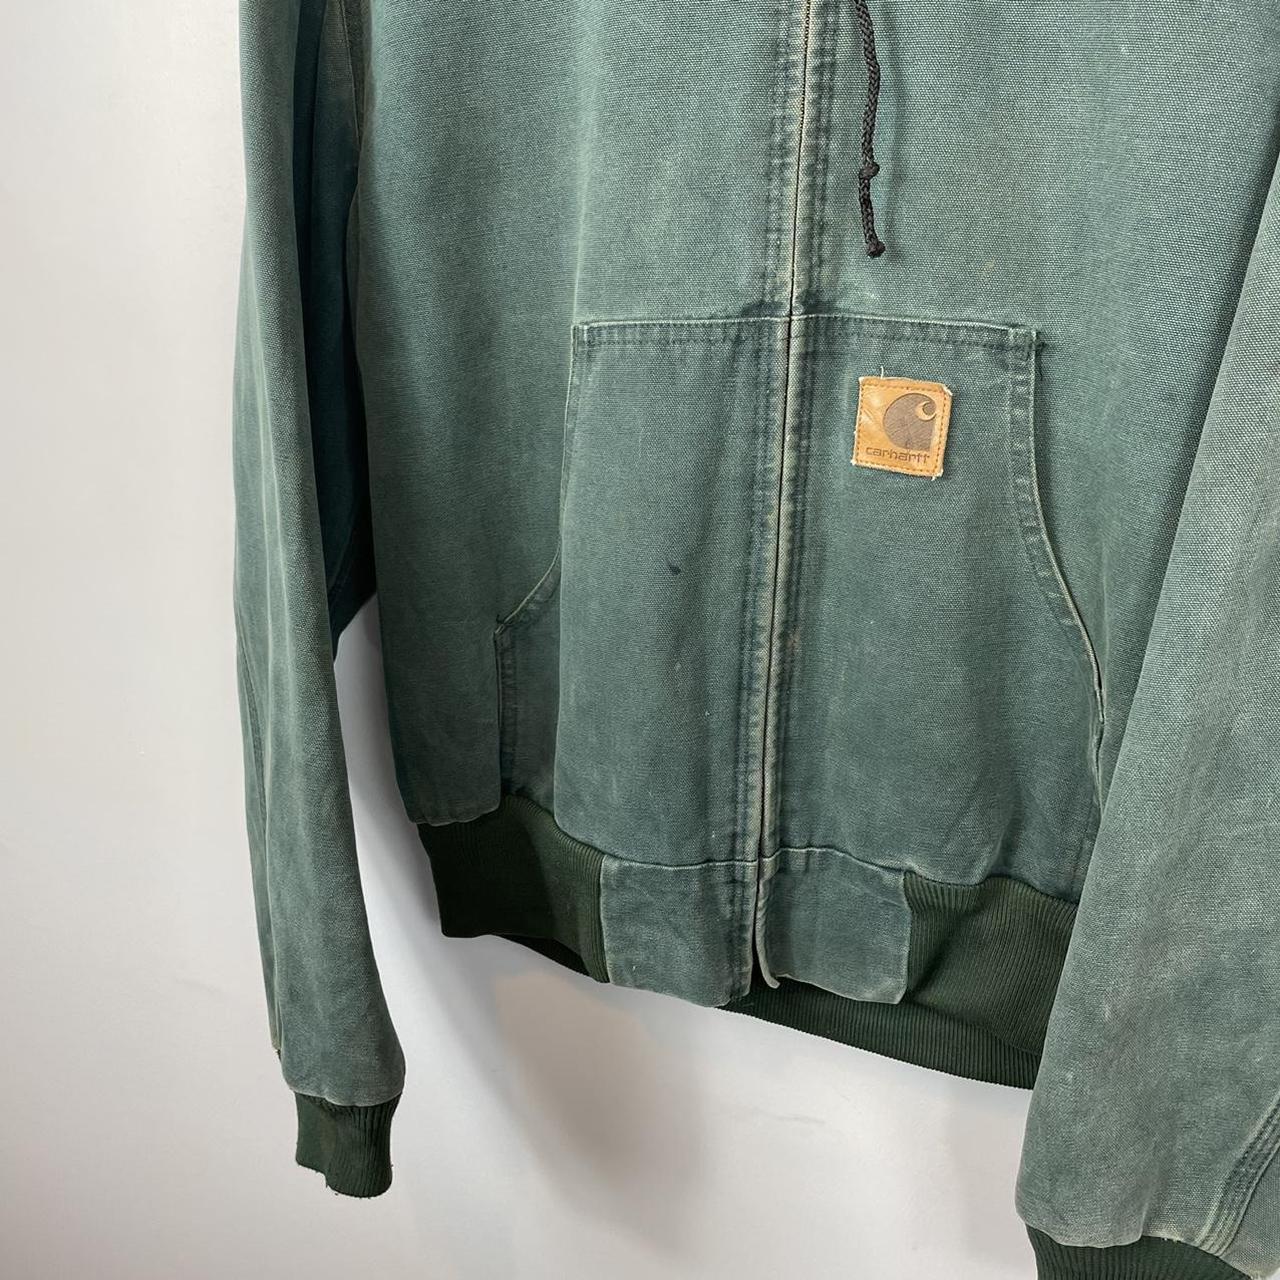 Vintage Carhartt Jacket, Faded Green, Union Made in... - Depop